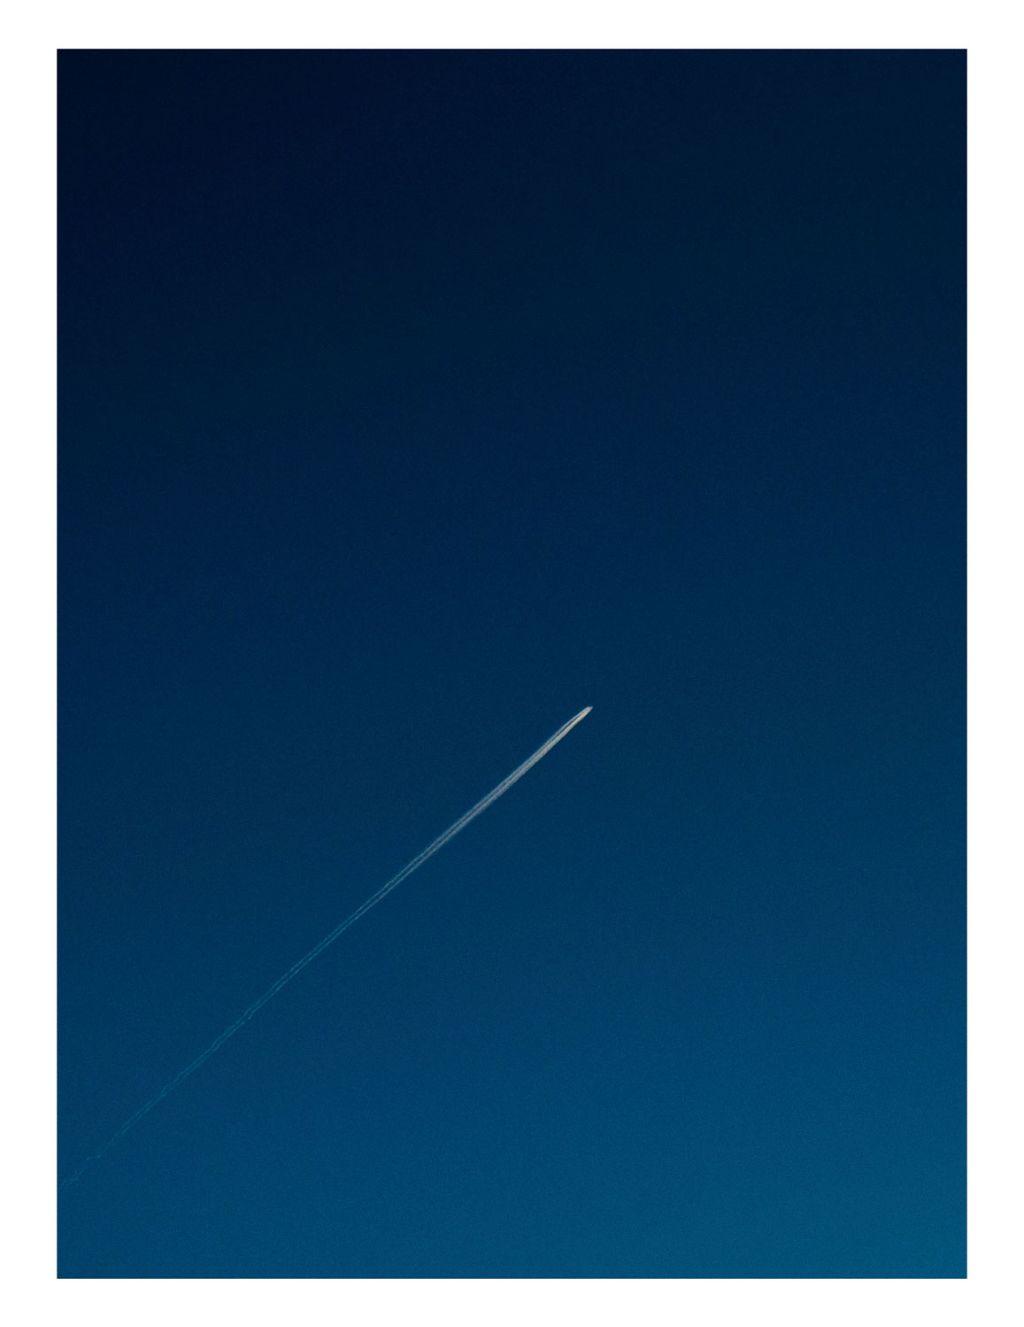 Streak Across the Sky by Wesam Almehin, First Exposu...